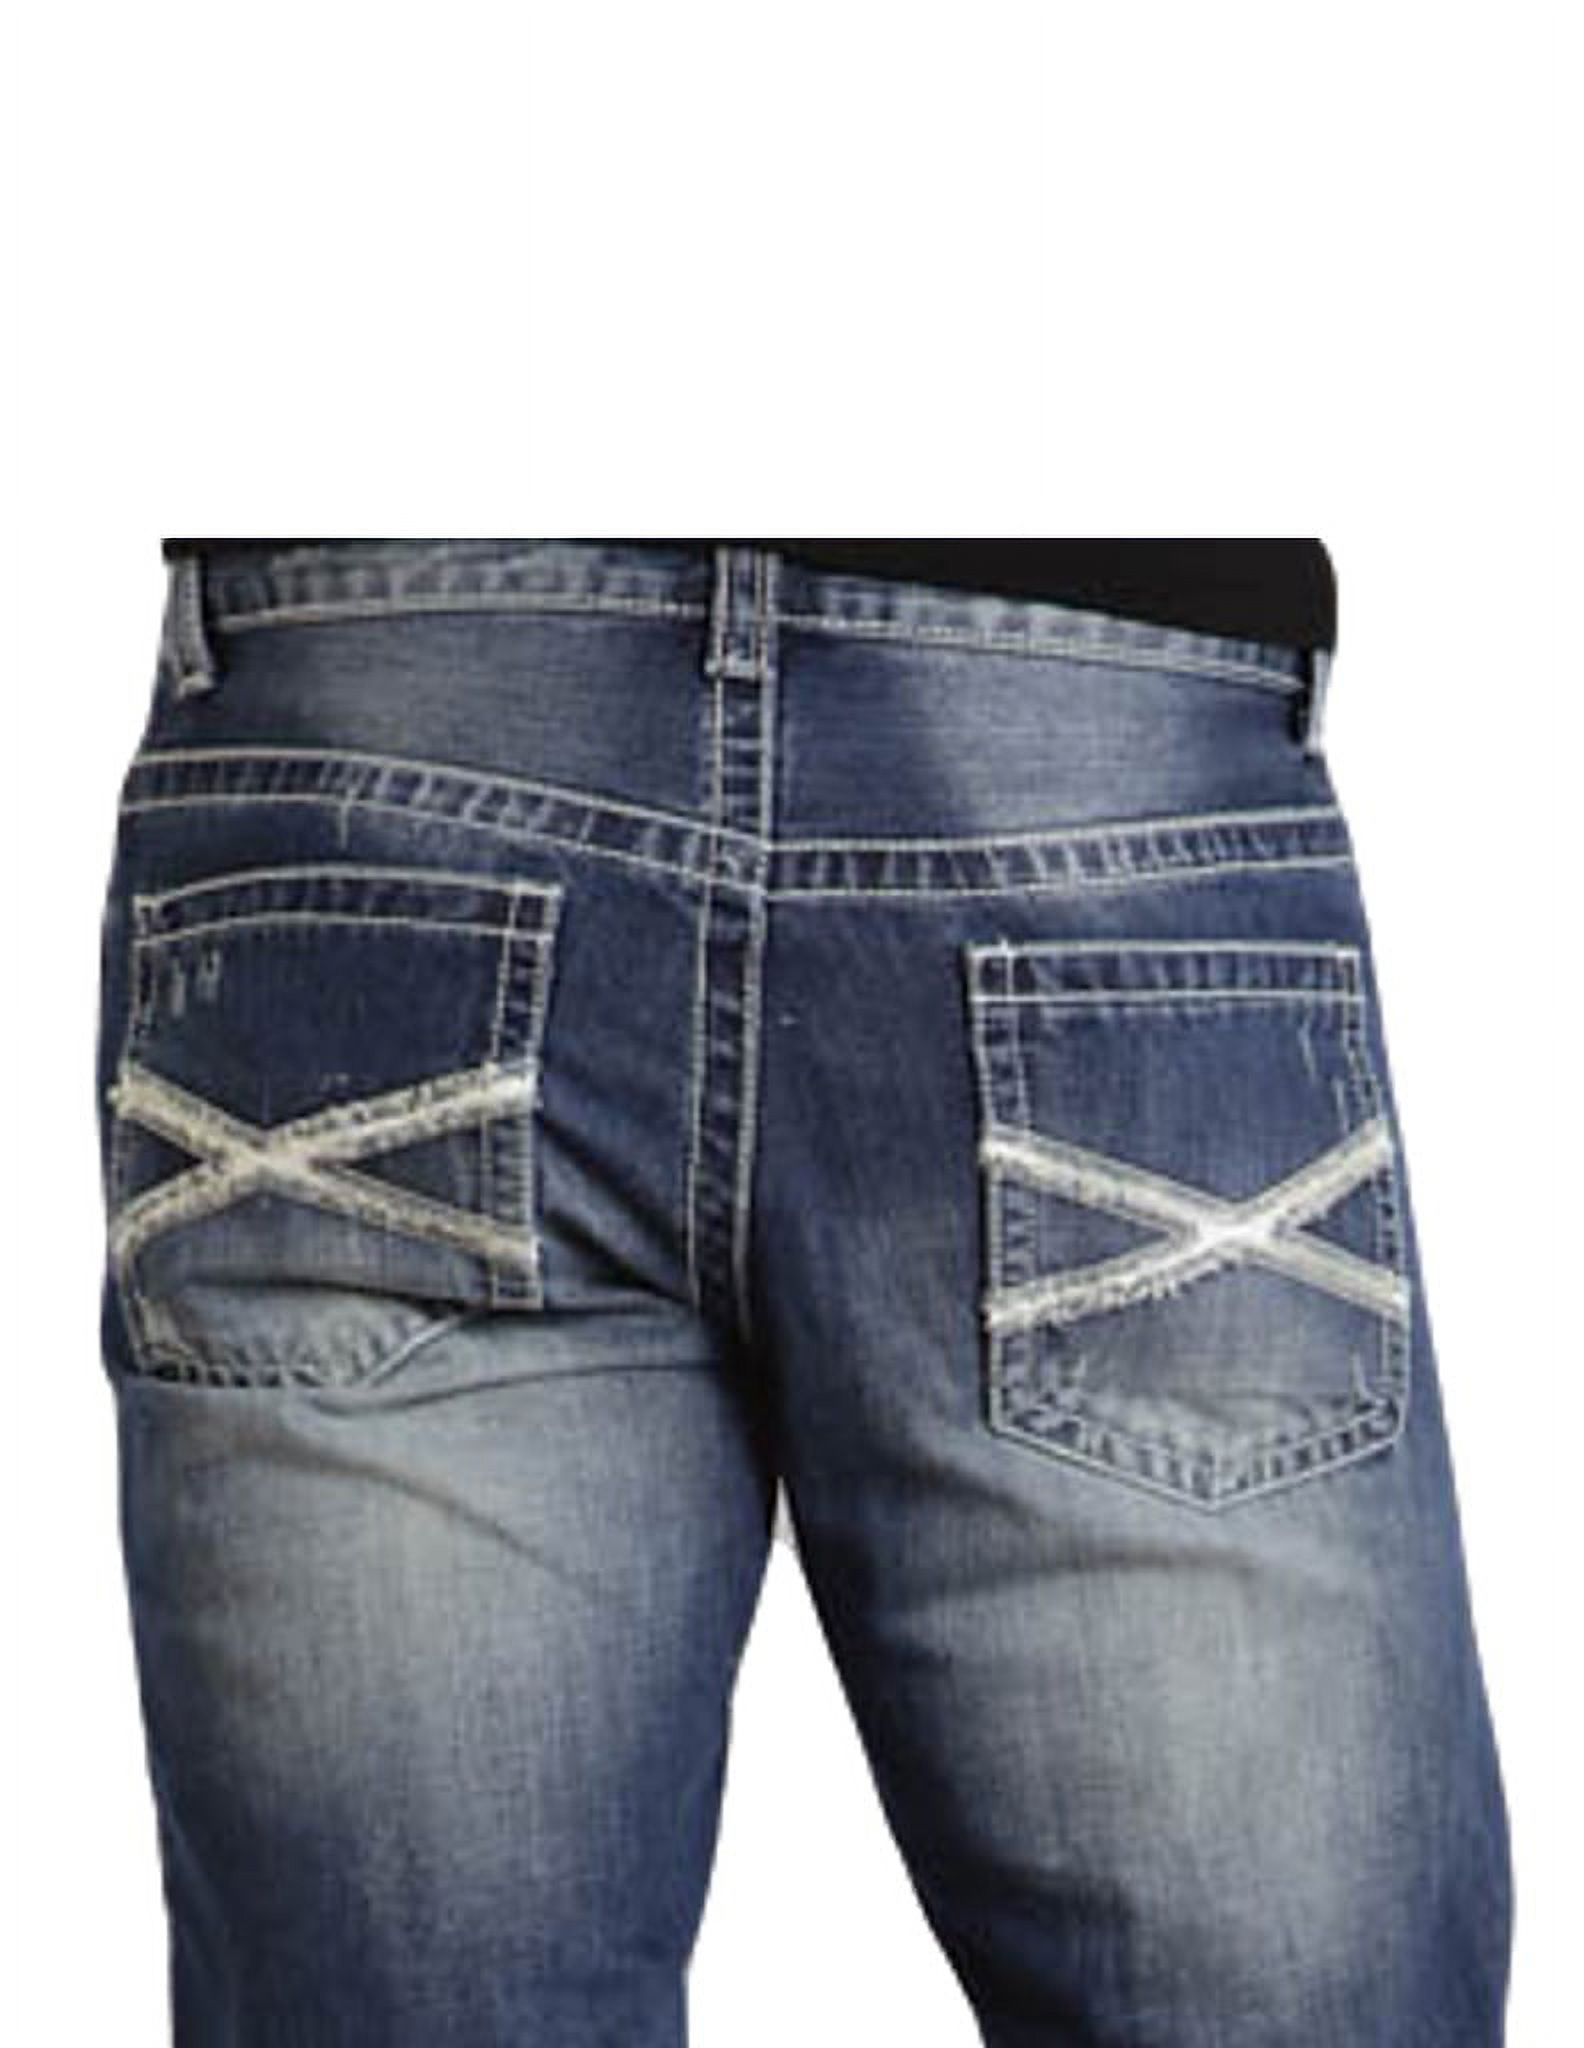 Stetson Denim Jeans Mens Rocks Fit Medium Wash 11-004-1014-3001 BU - image 3 of 3